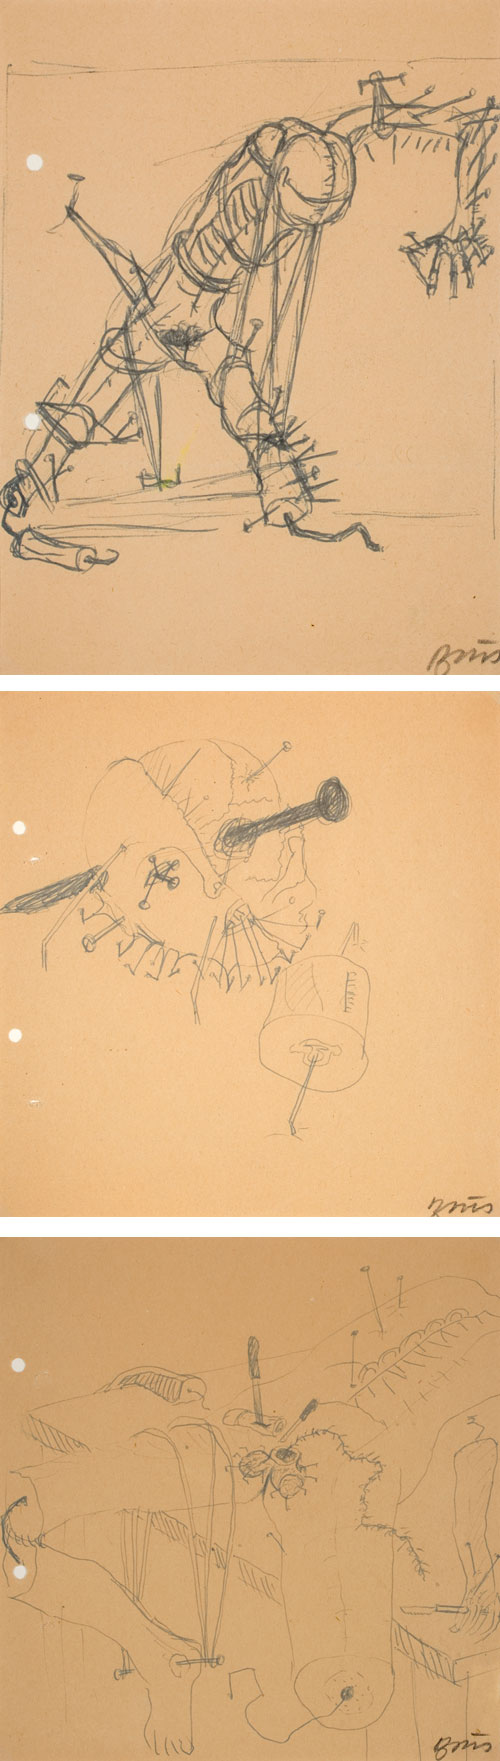 Günter Brus. 3 Aktionsskizzen, c1965–69. Three drawings, pencil on paper. Courtesy Richard Saltoun Gallery.